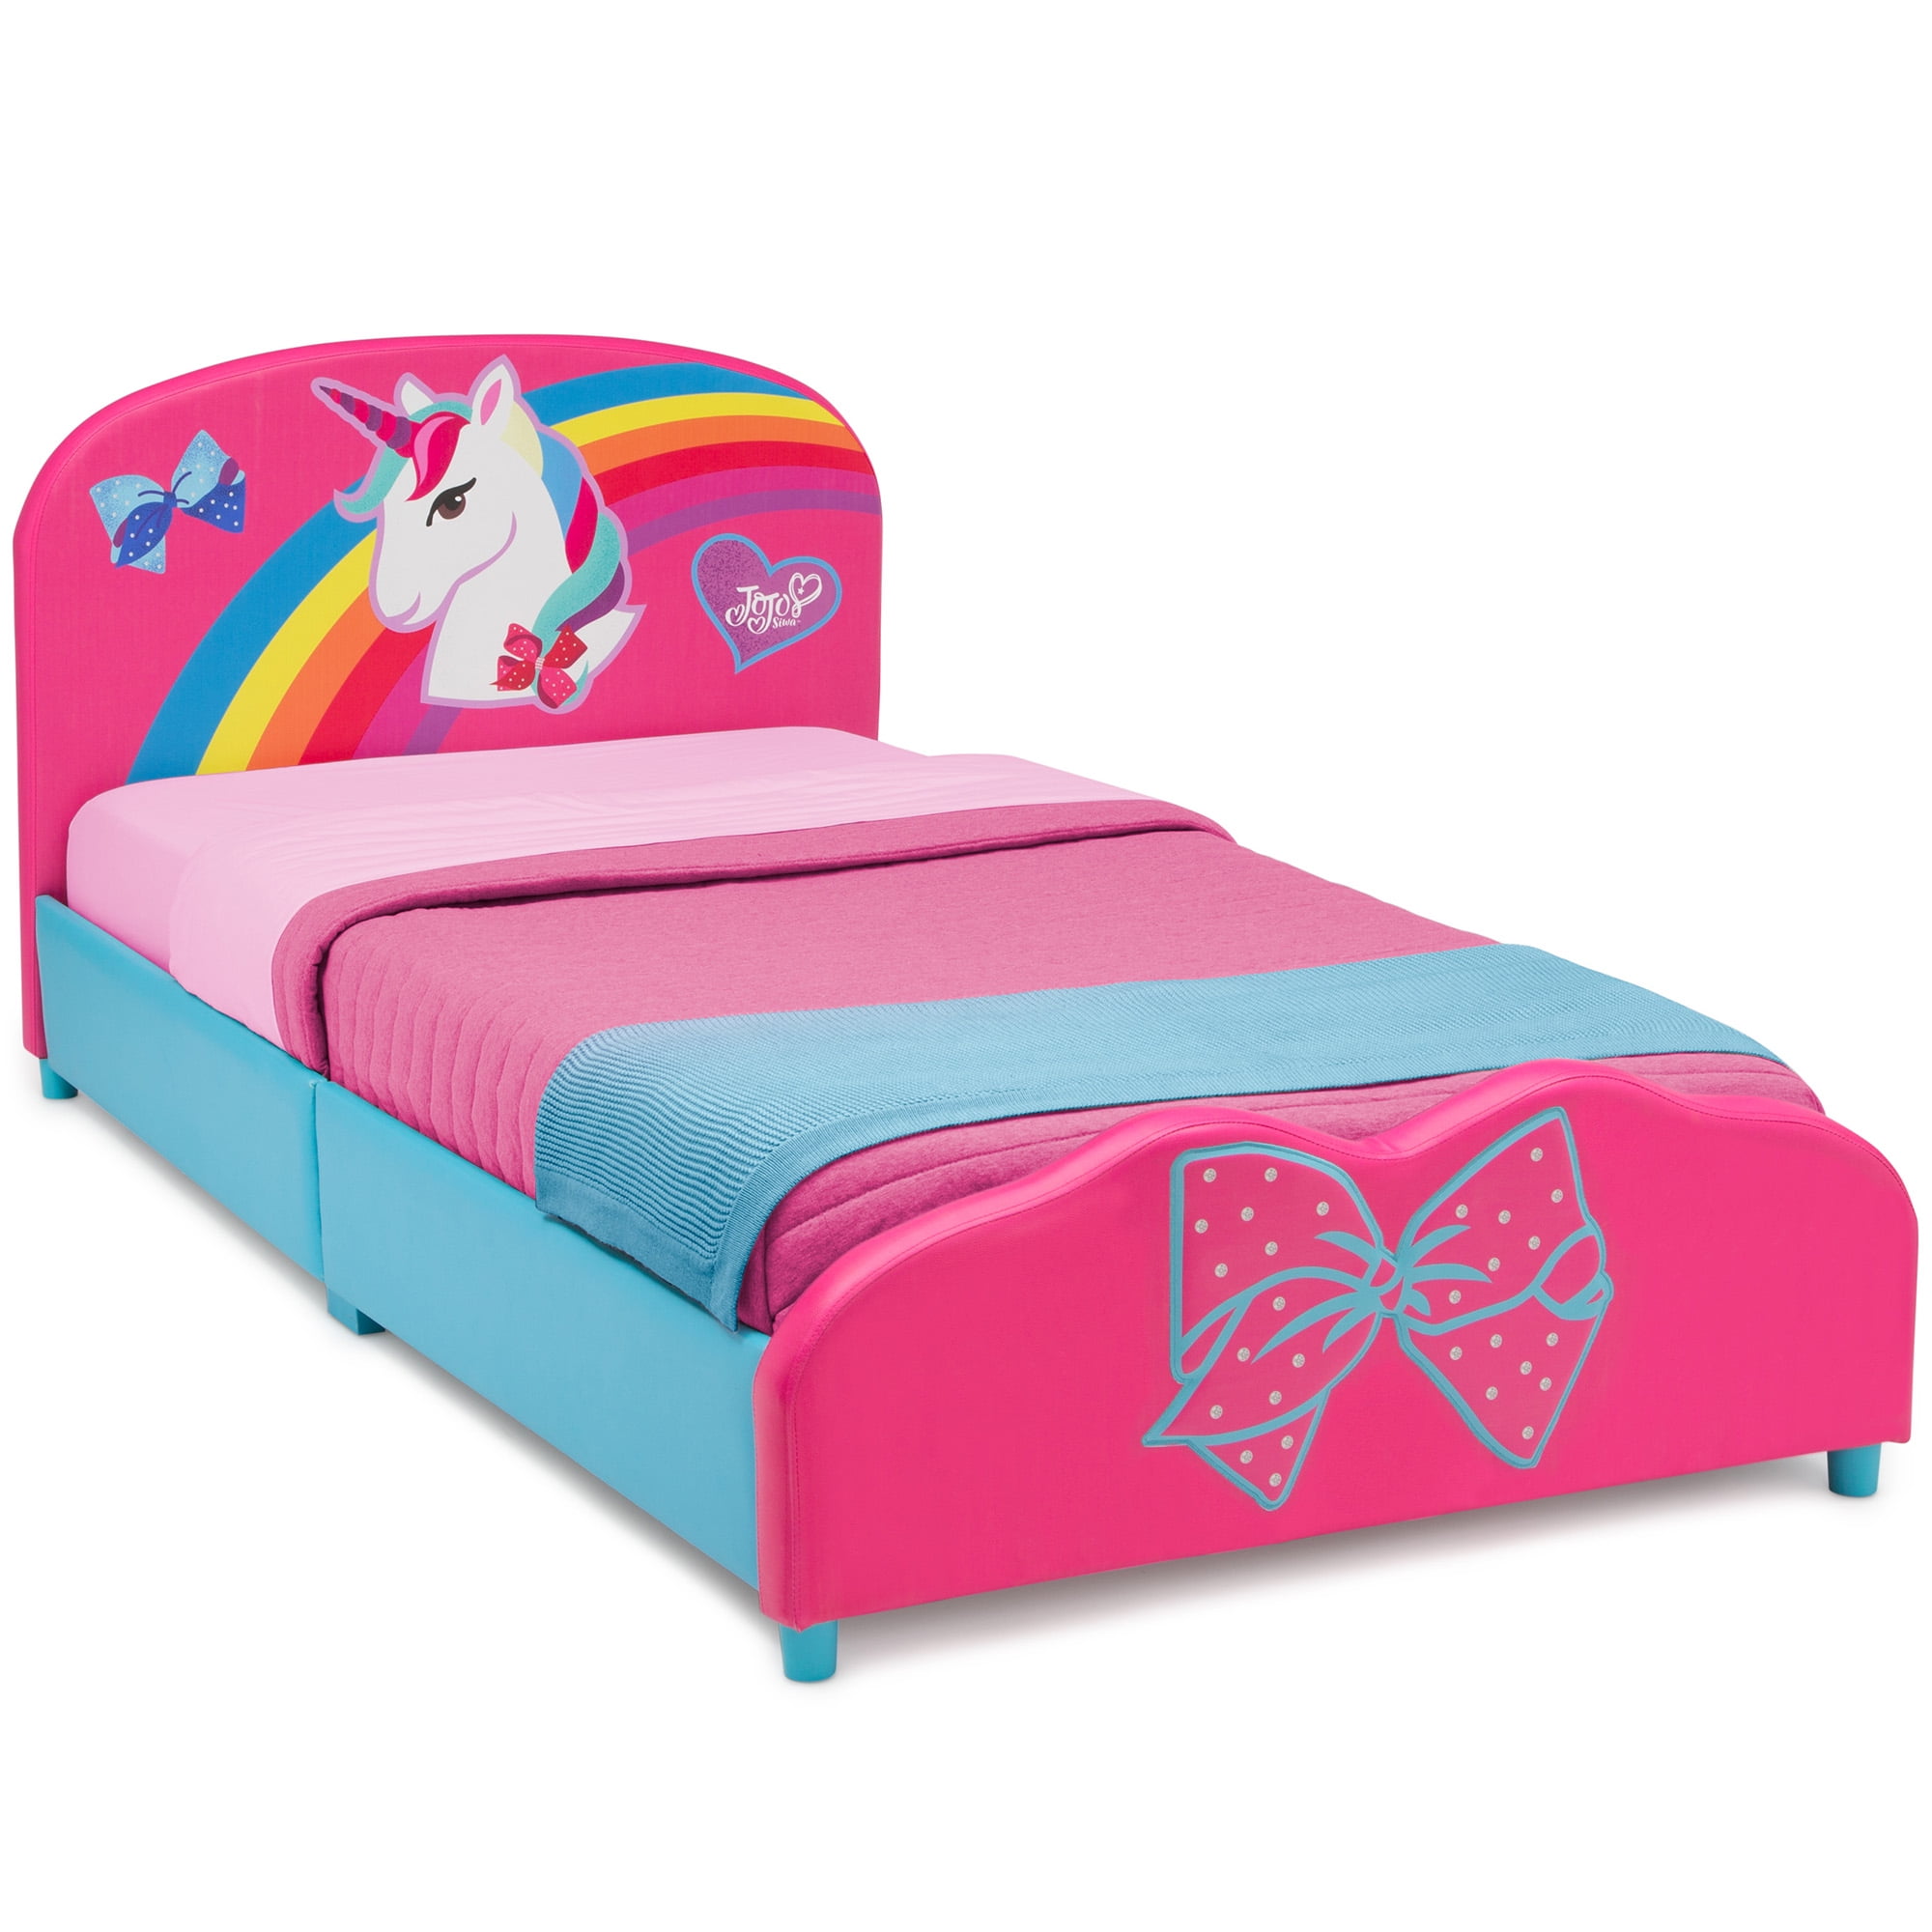 beds for kids walmart